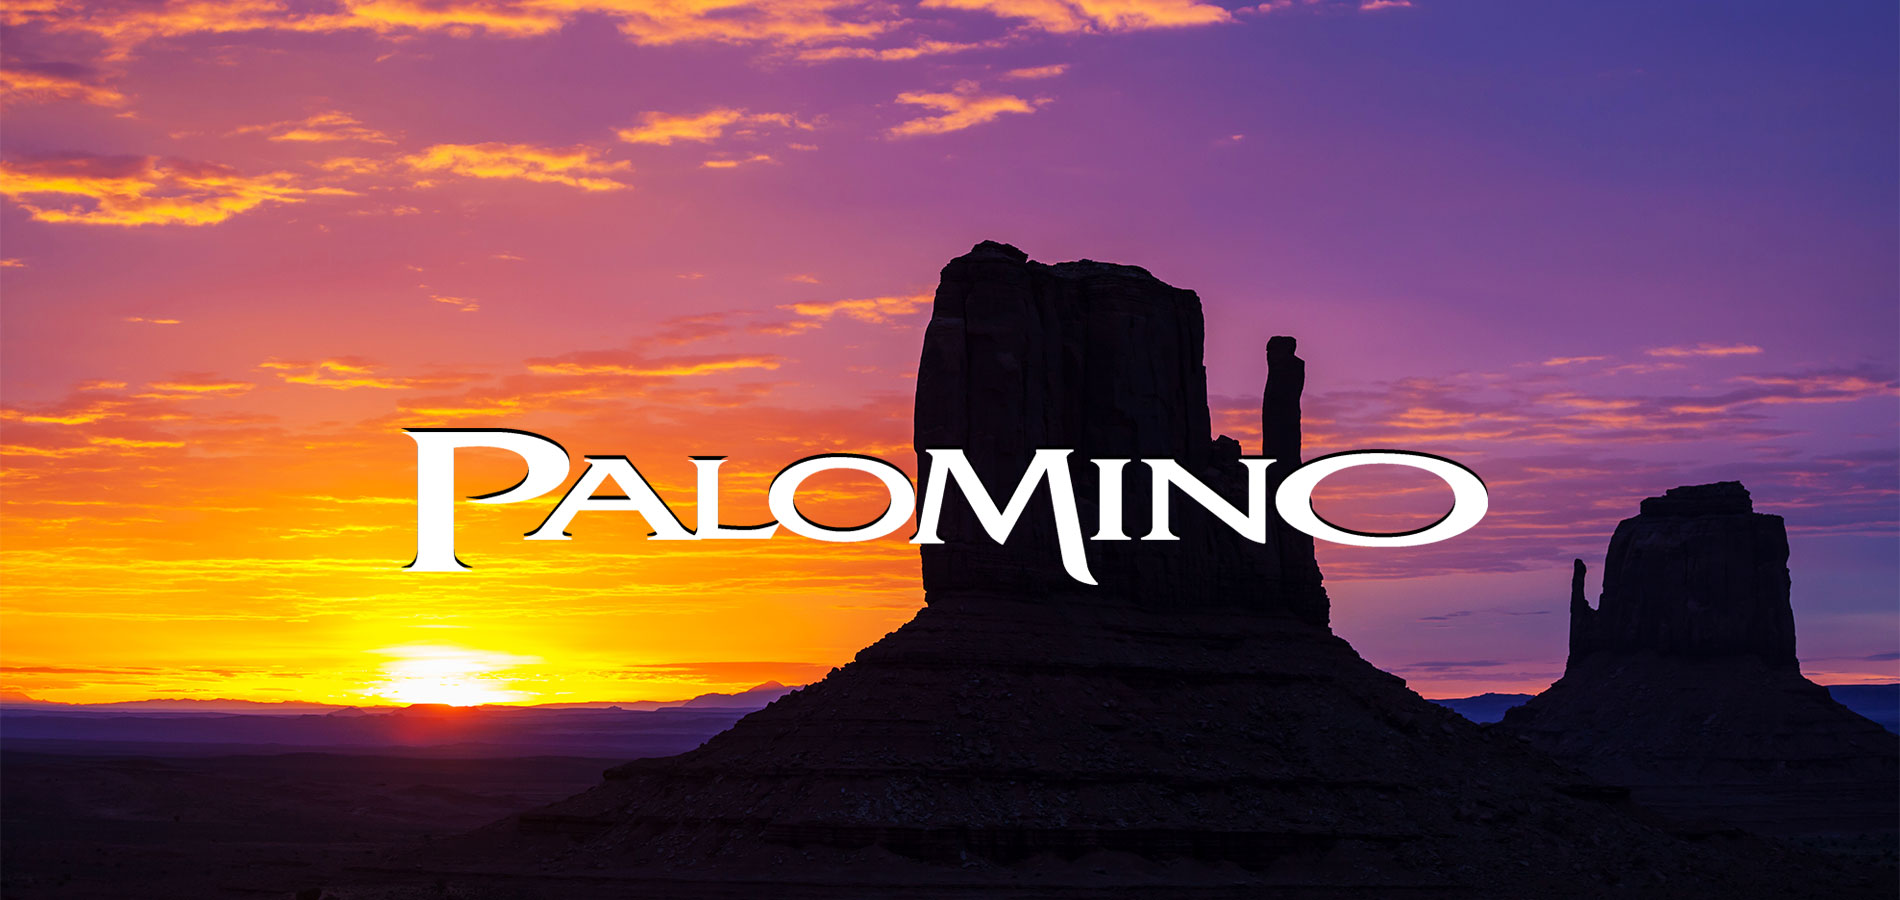 Welcome to Palomino RV.